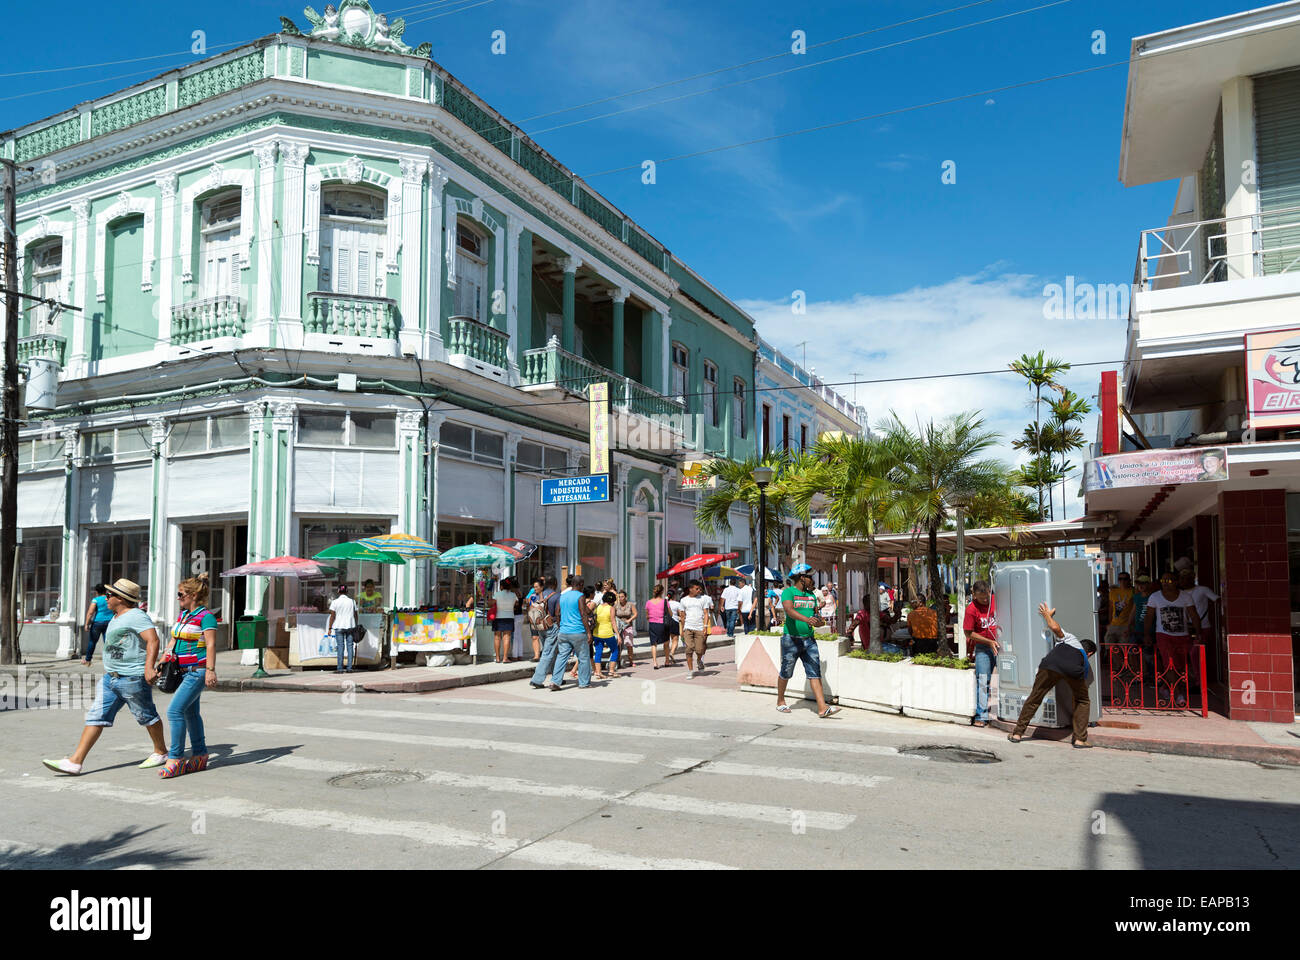 CIENFUEGOS, Kuba - 7. Mai 2014: Eine lebendige Innenstadt Straße in der Stadt Cienfuegos, Kuba Stockfoto